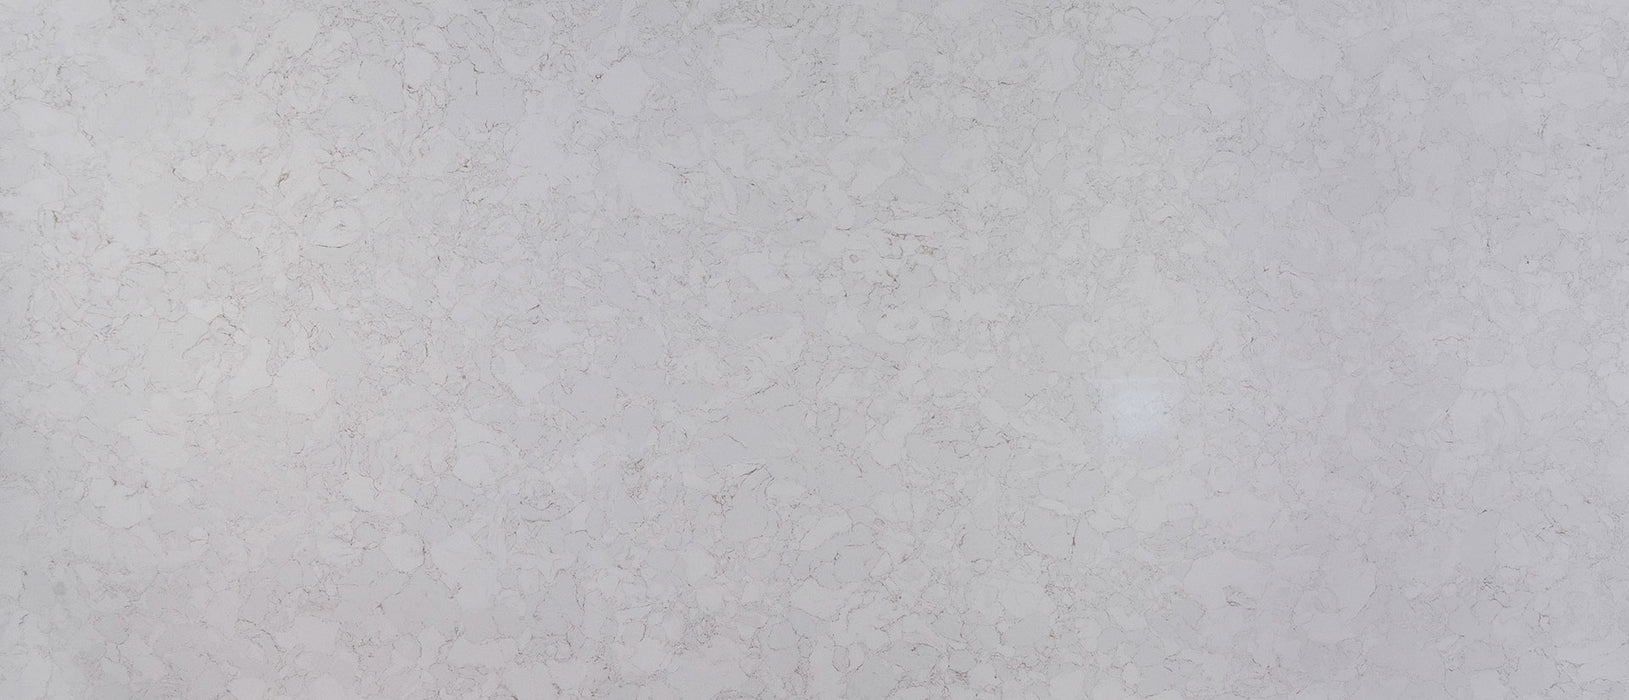 Marbella white quartz countertop slab